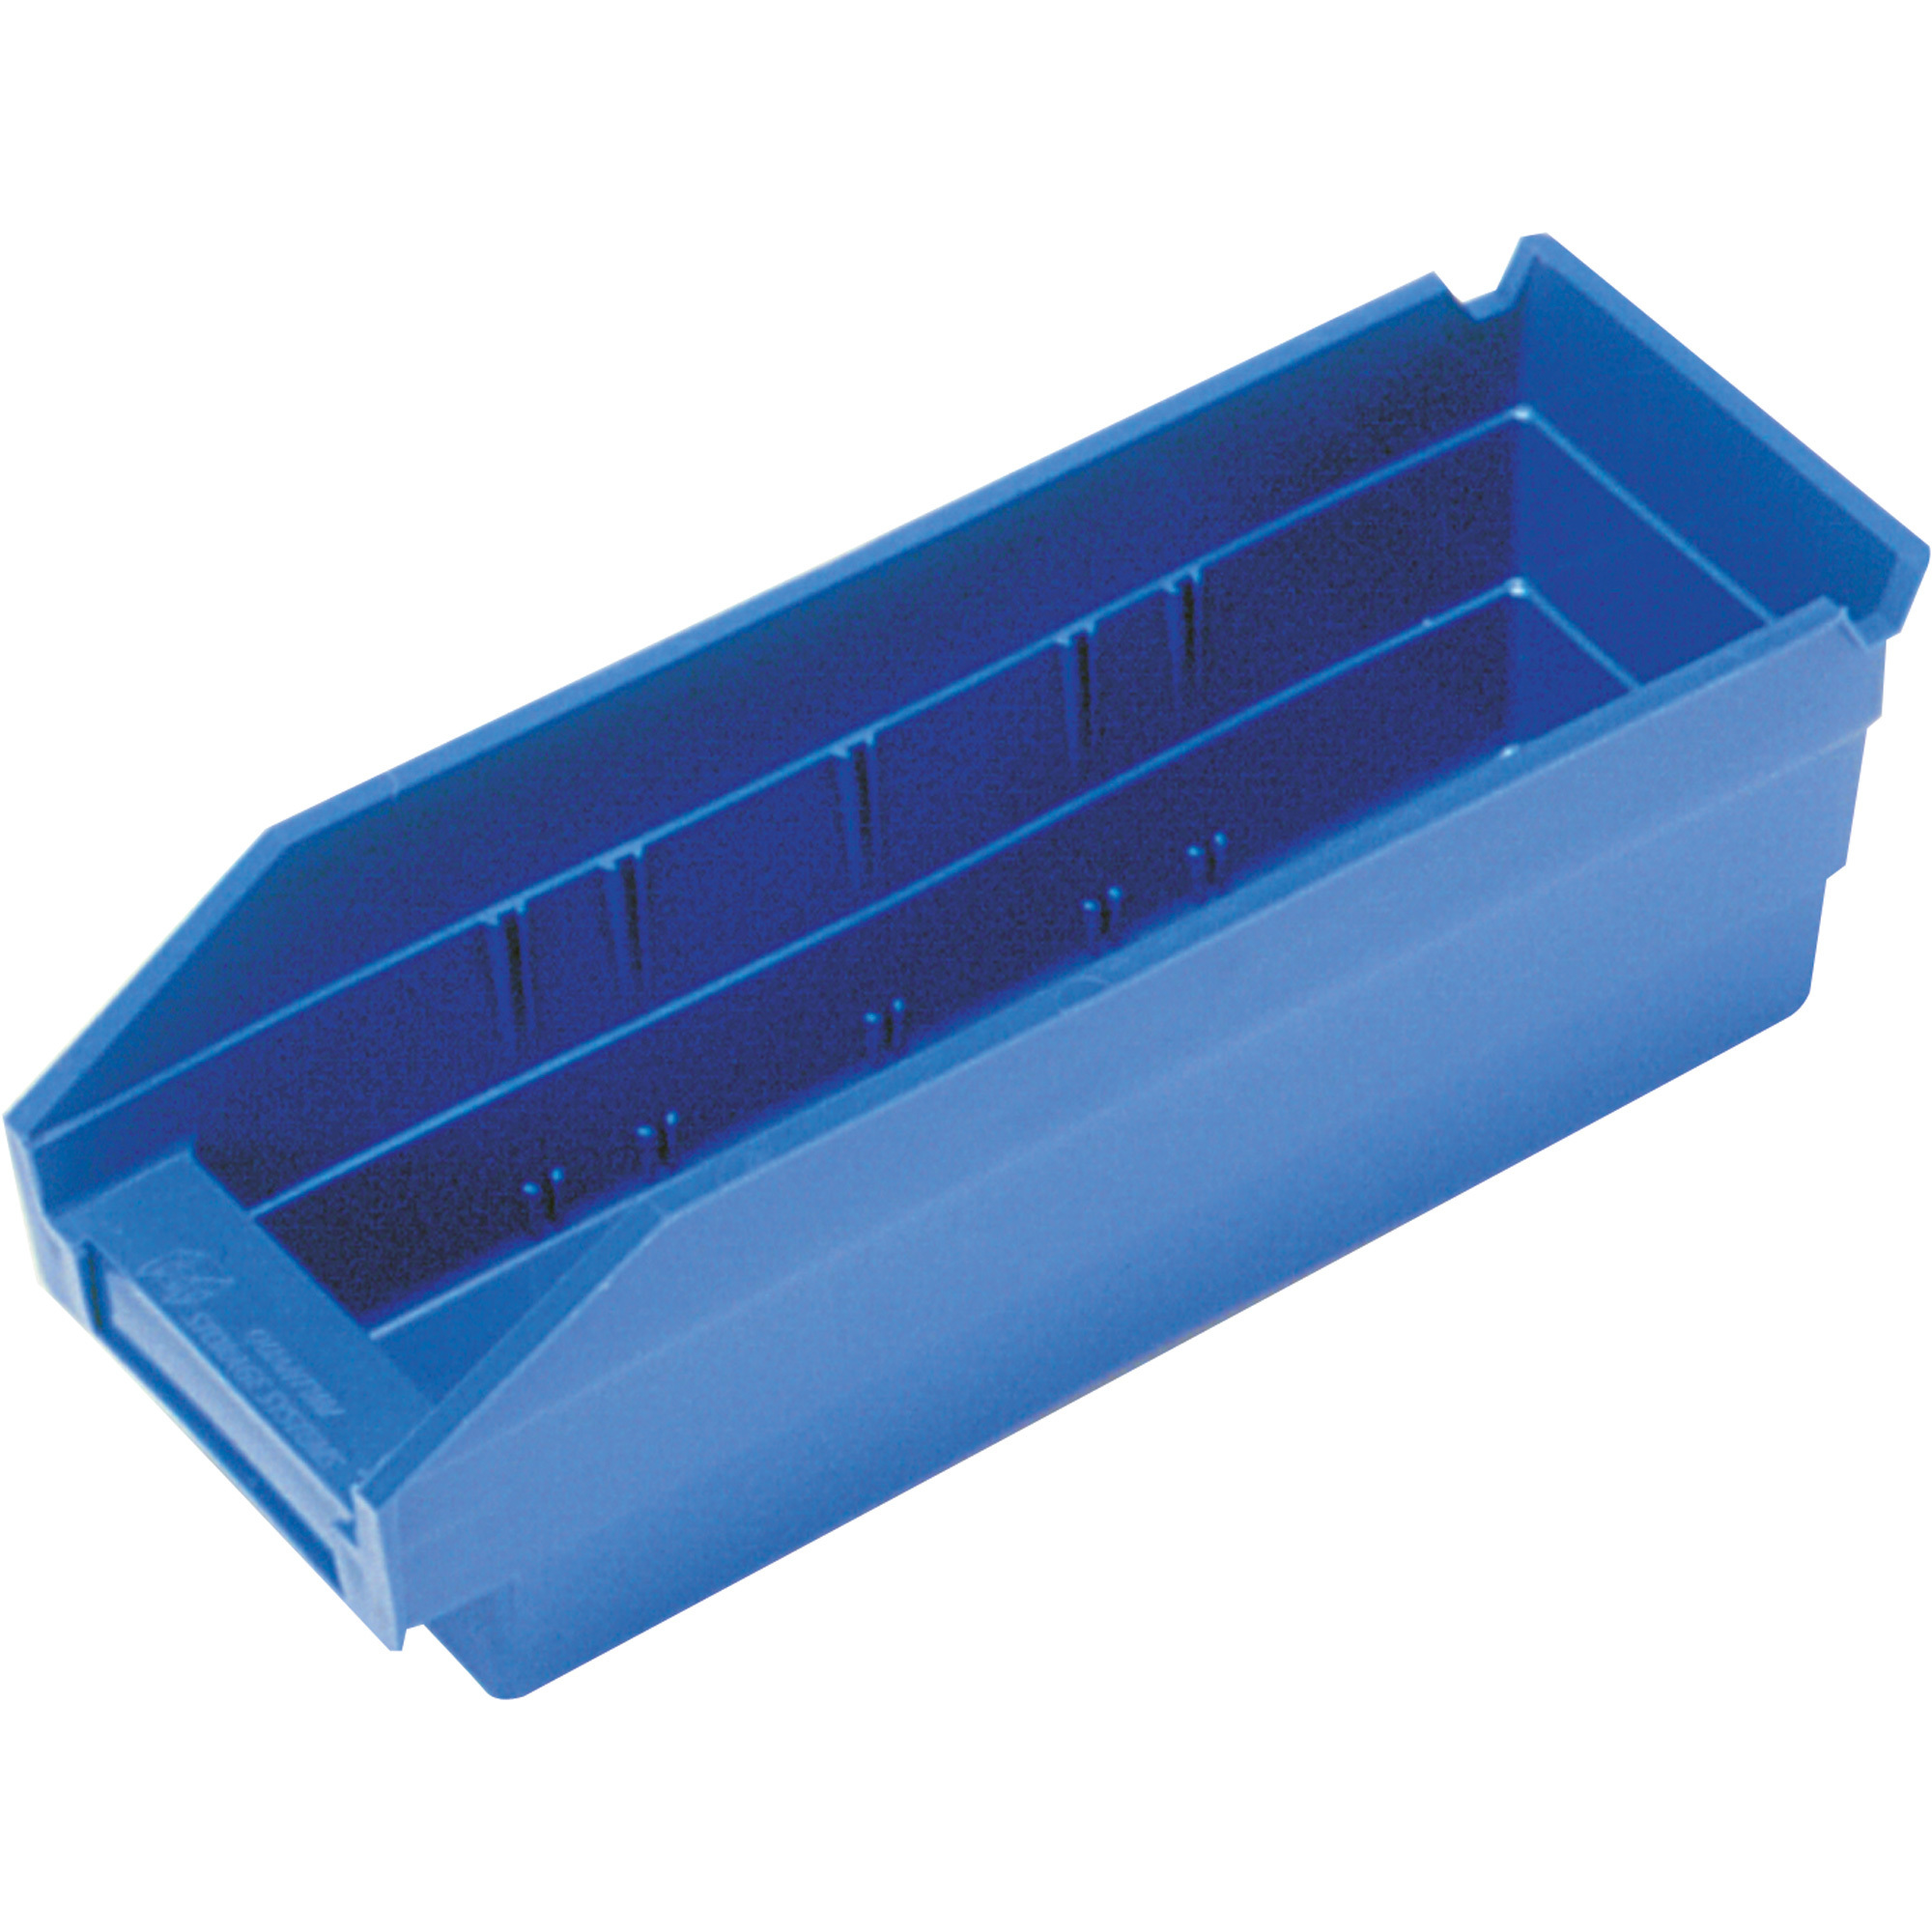 Plastic Stackable Bins - 11 x 5 1/2 x 5, Blue